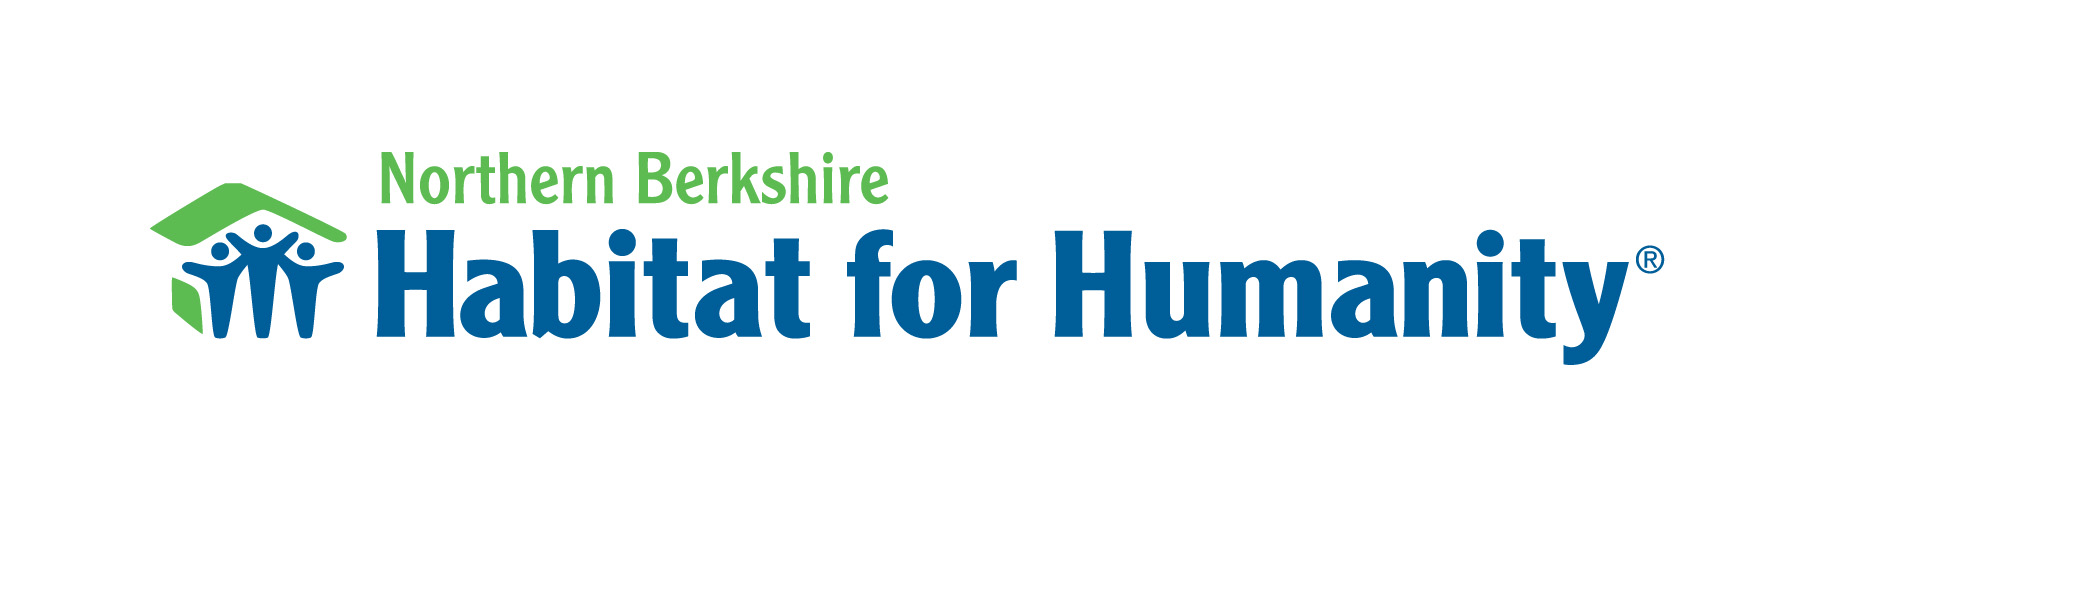 Northern Berkshire Habitat for Humanity logo